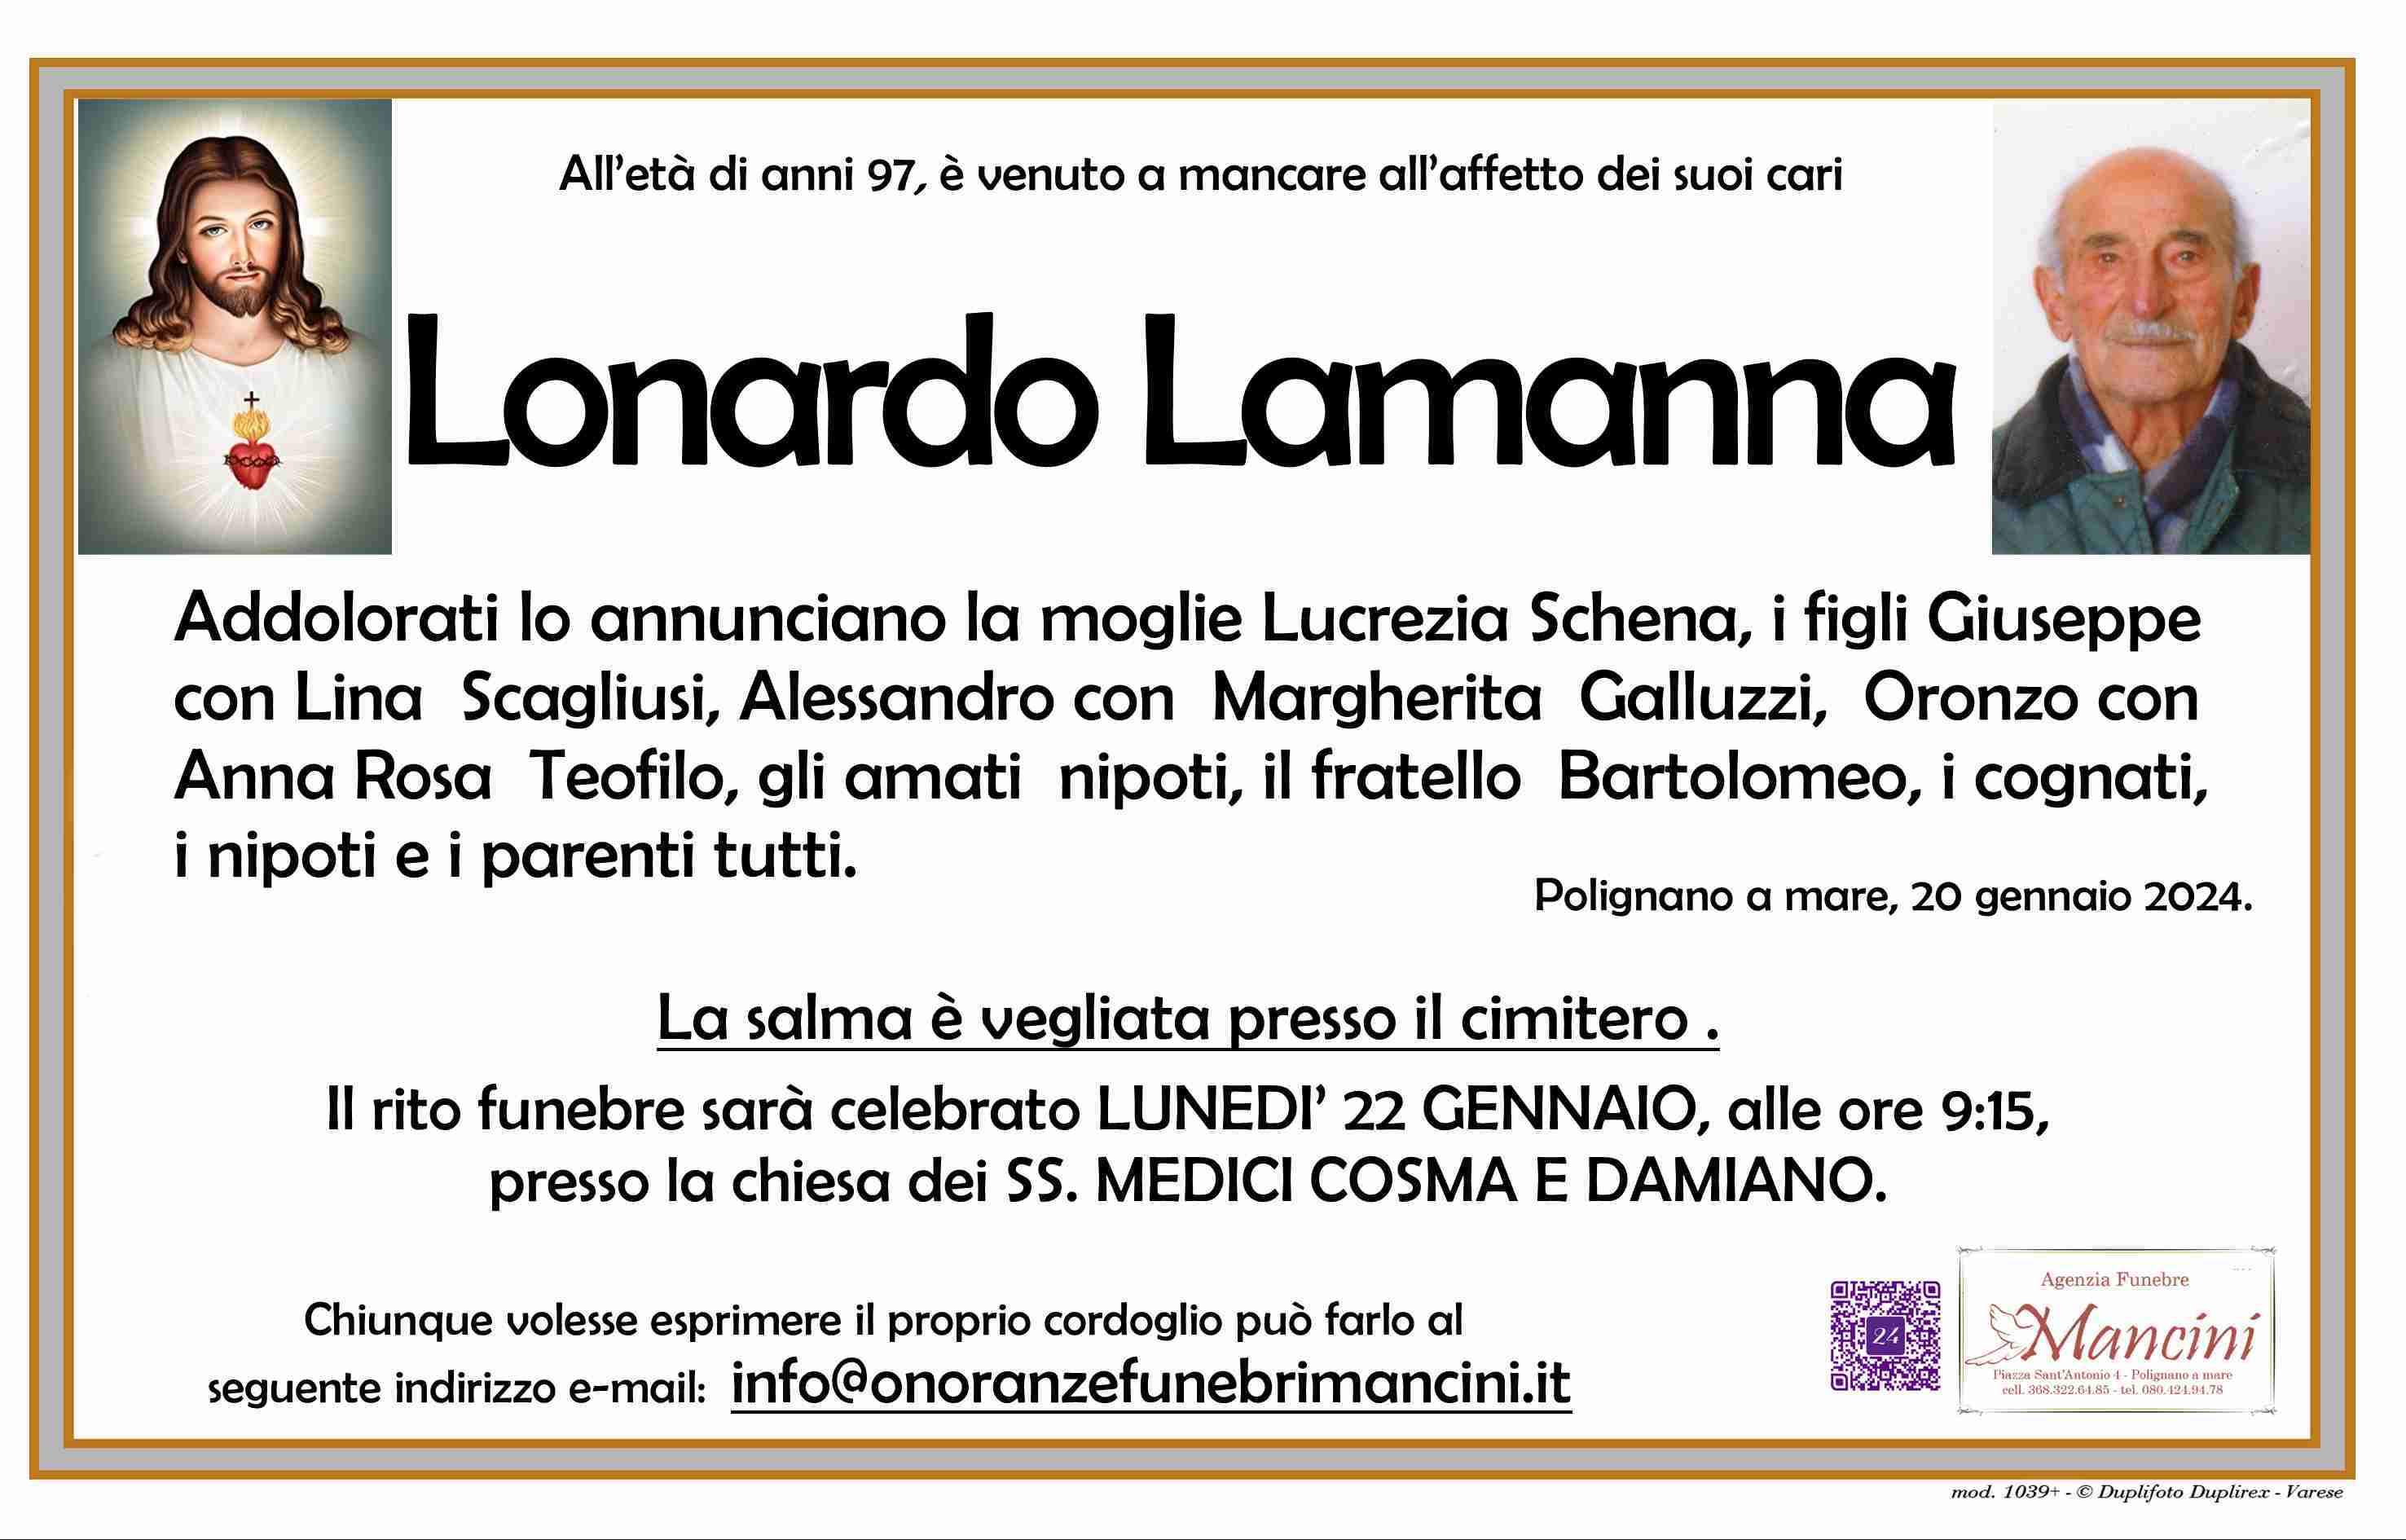 Lonardo Lamanna